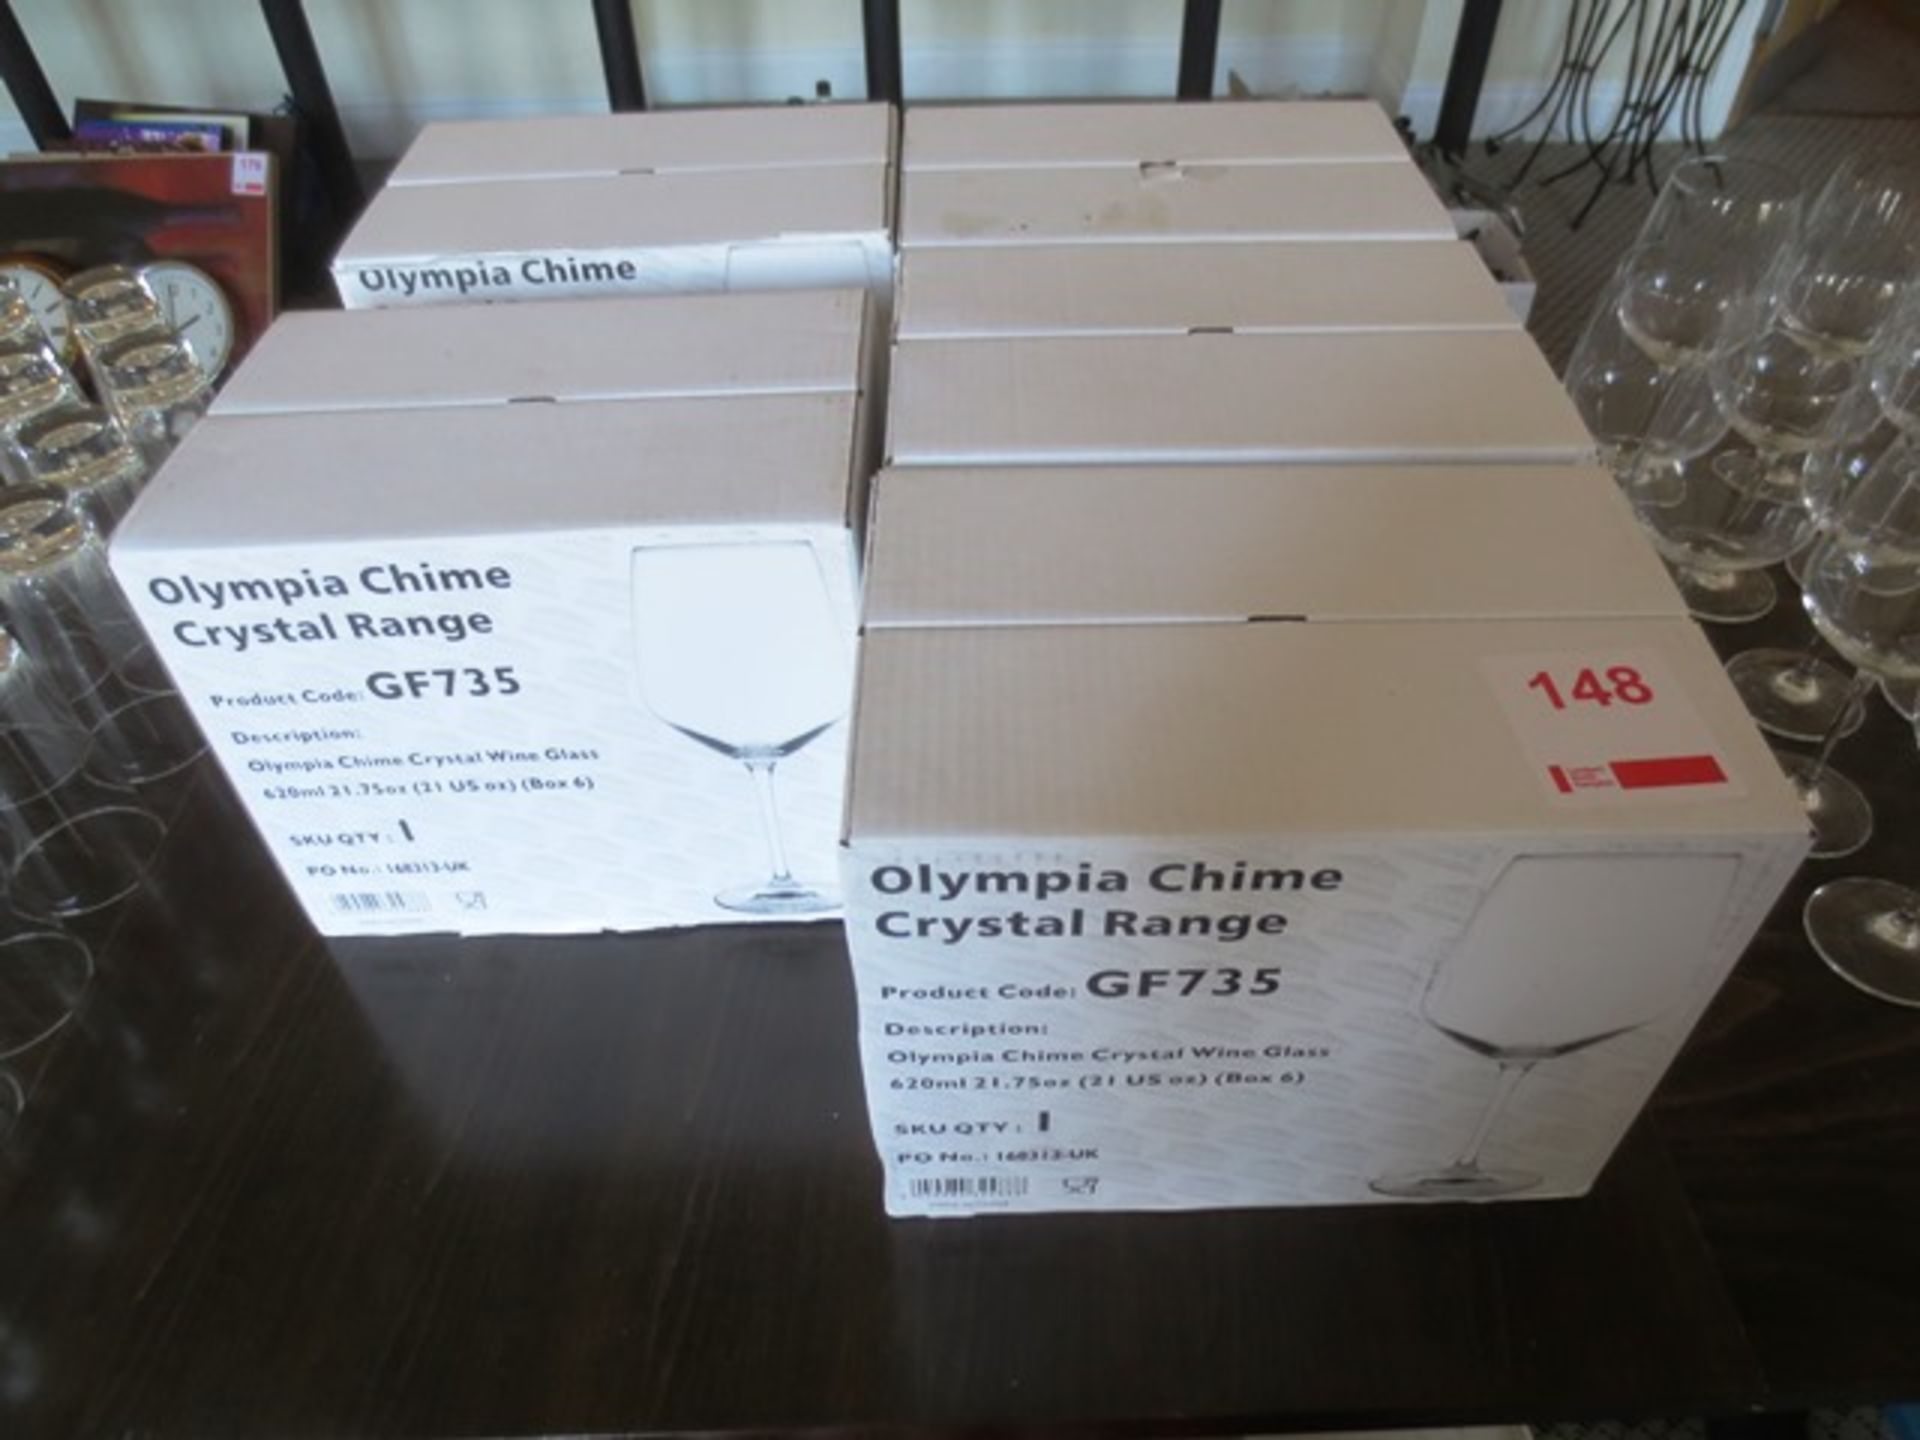 Thirty Olympia Chime crystal range 620ml wine glasses